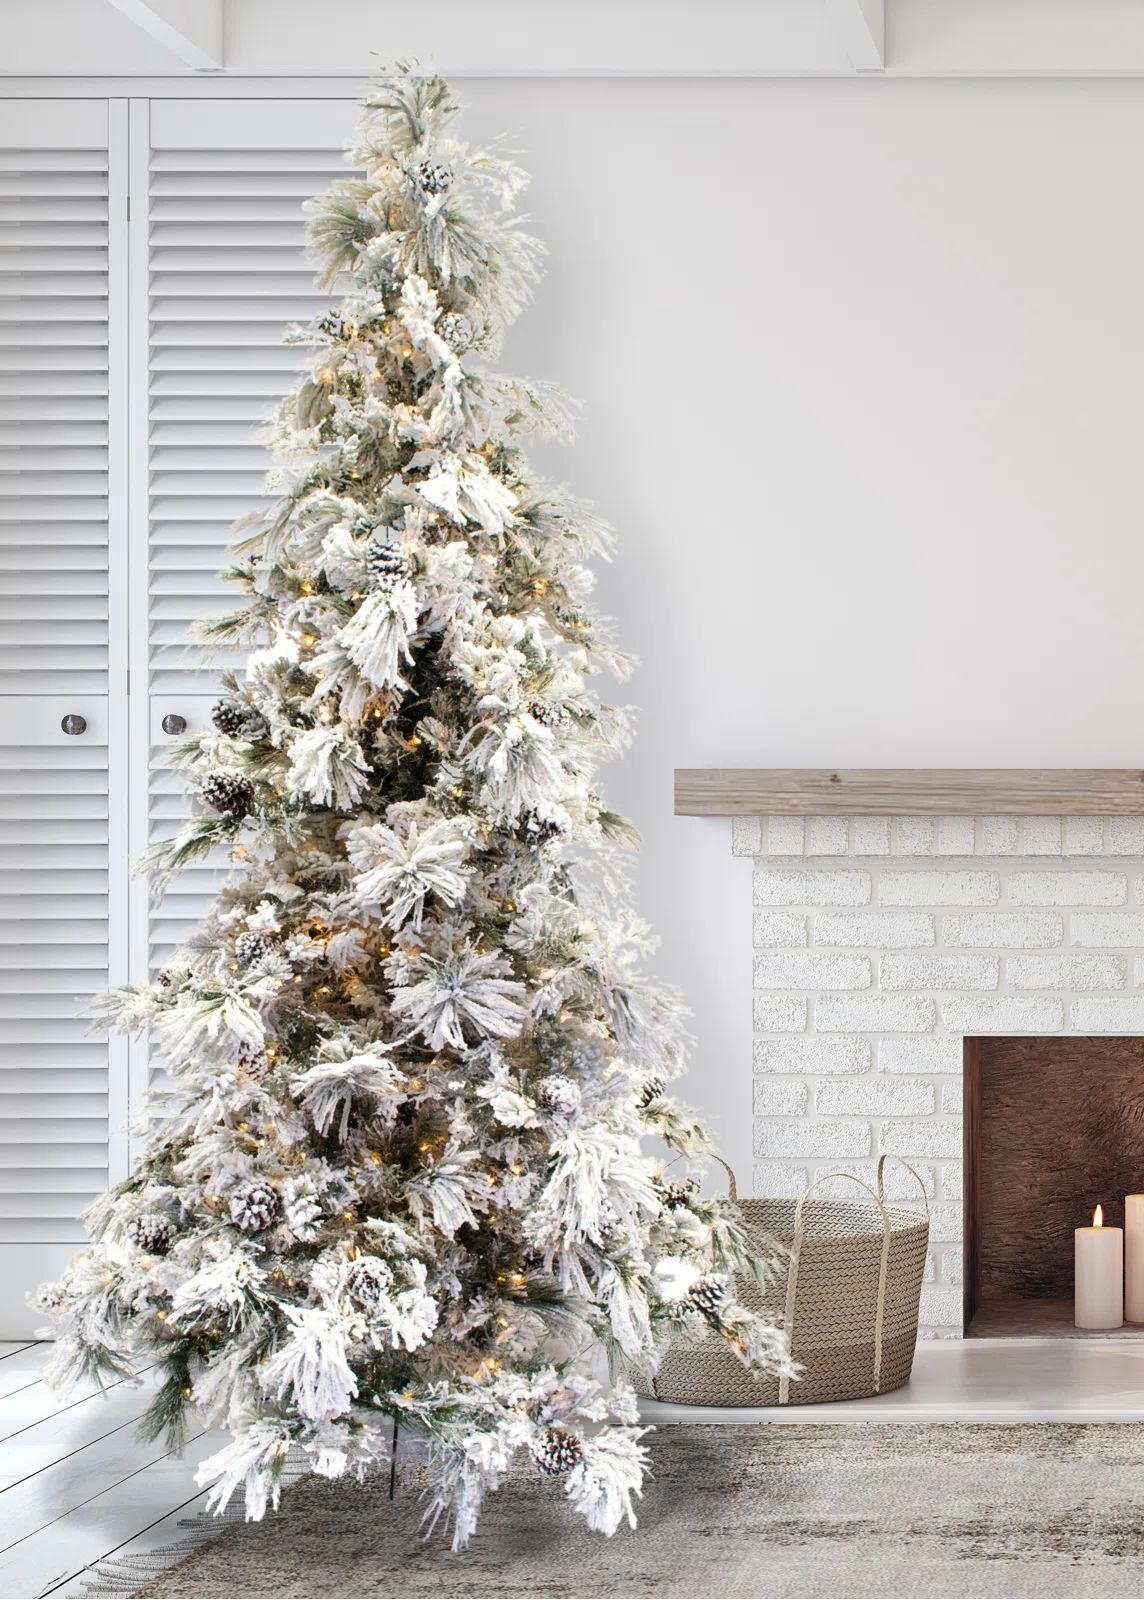 Lighted Artificial Pine Christmas Tree | Wayfair Professional